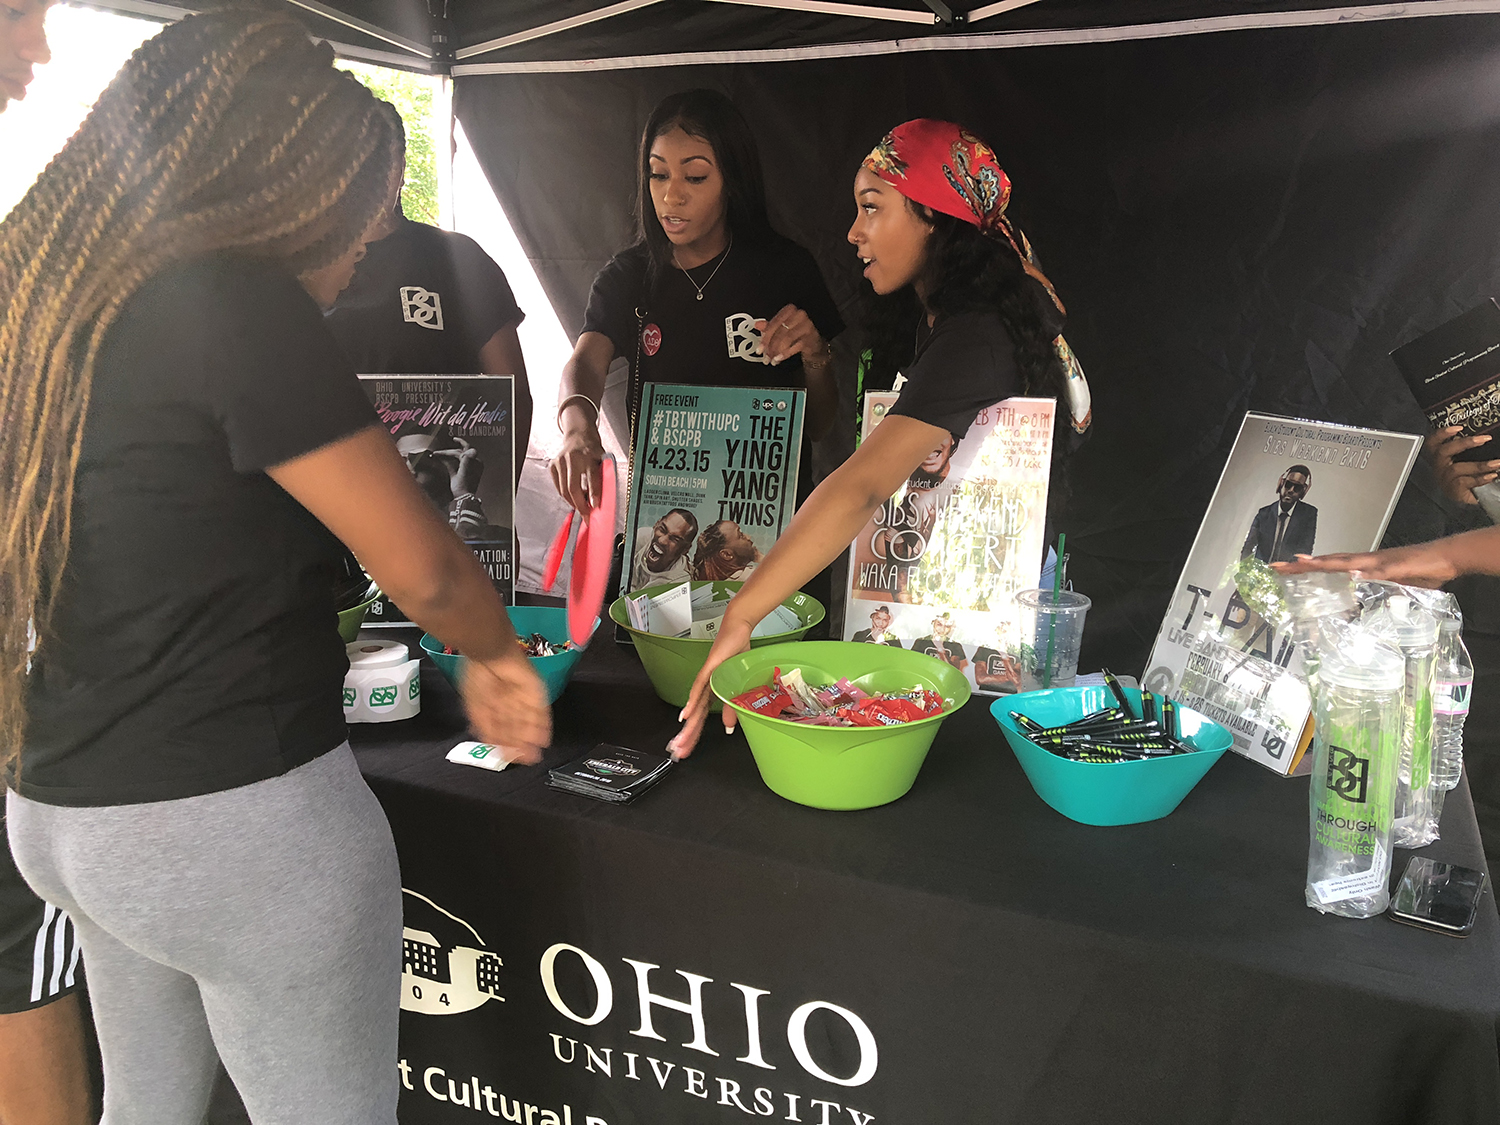 Student Organizations Ohio University